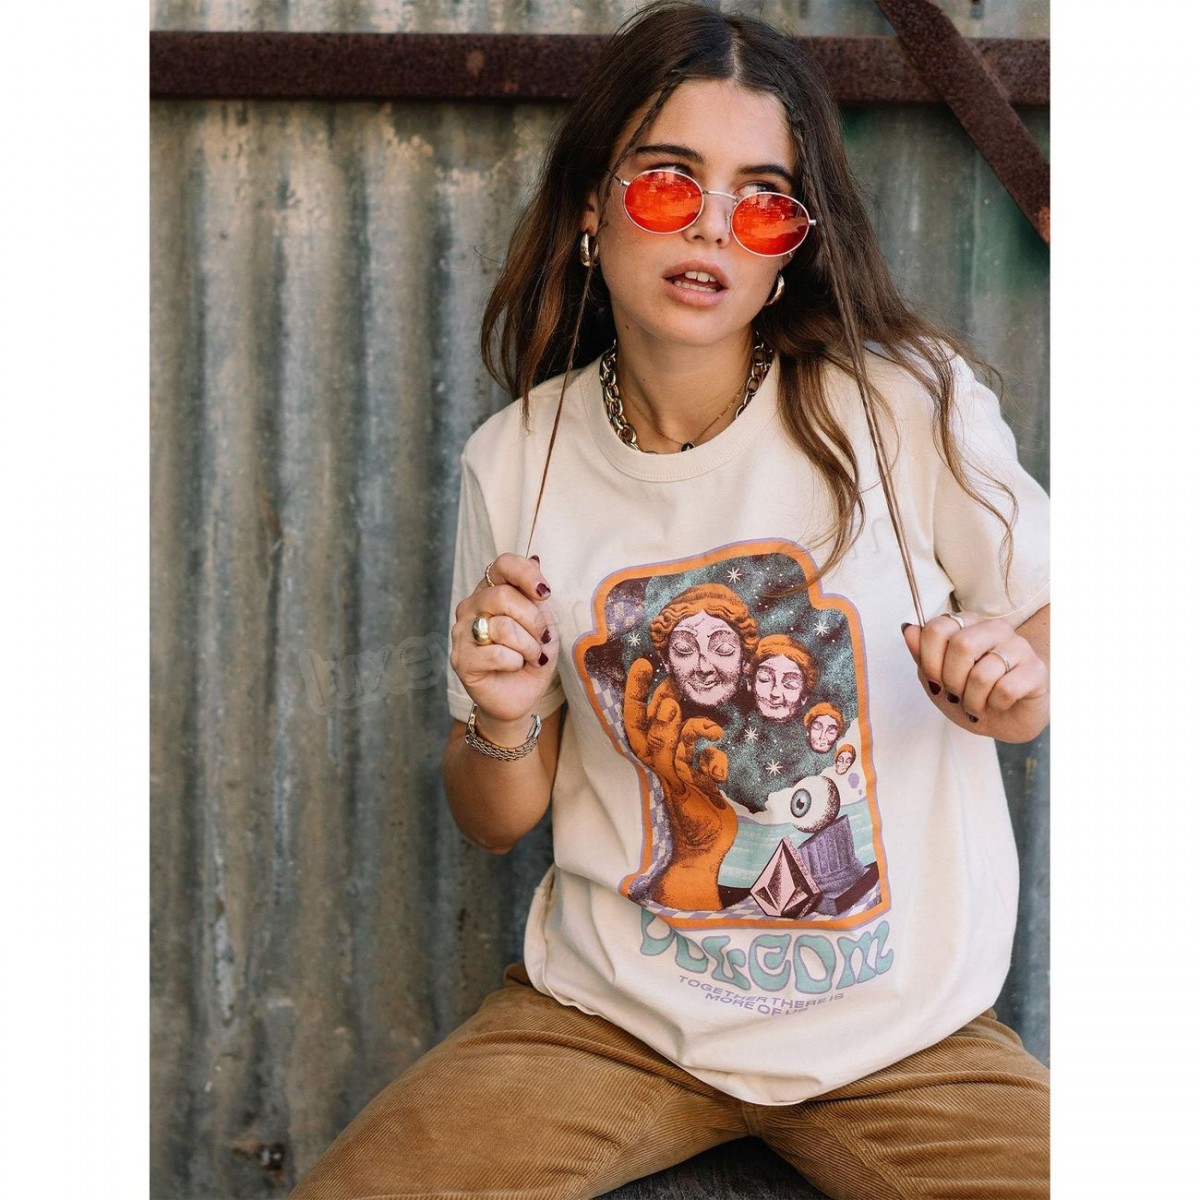 Volcom-Randonnée pédestre femme VOLCOM T-shirt Volcom Max Loeffler Tee Sand Femme Vente en ligne - -2